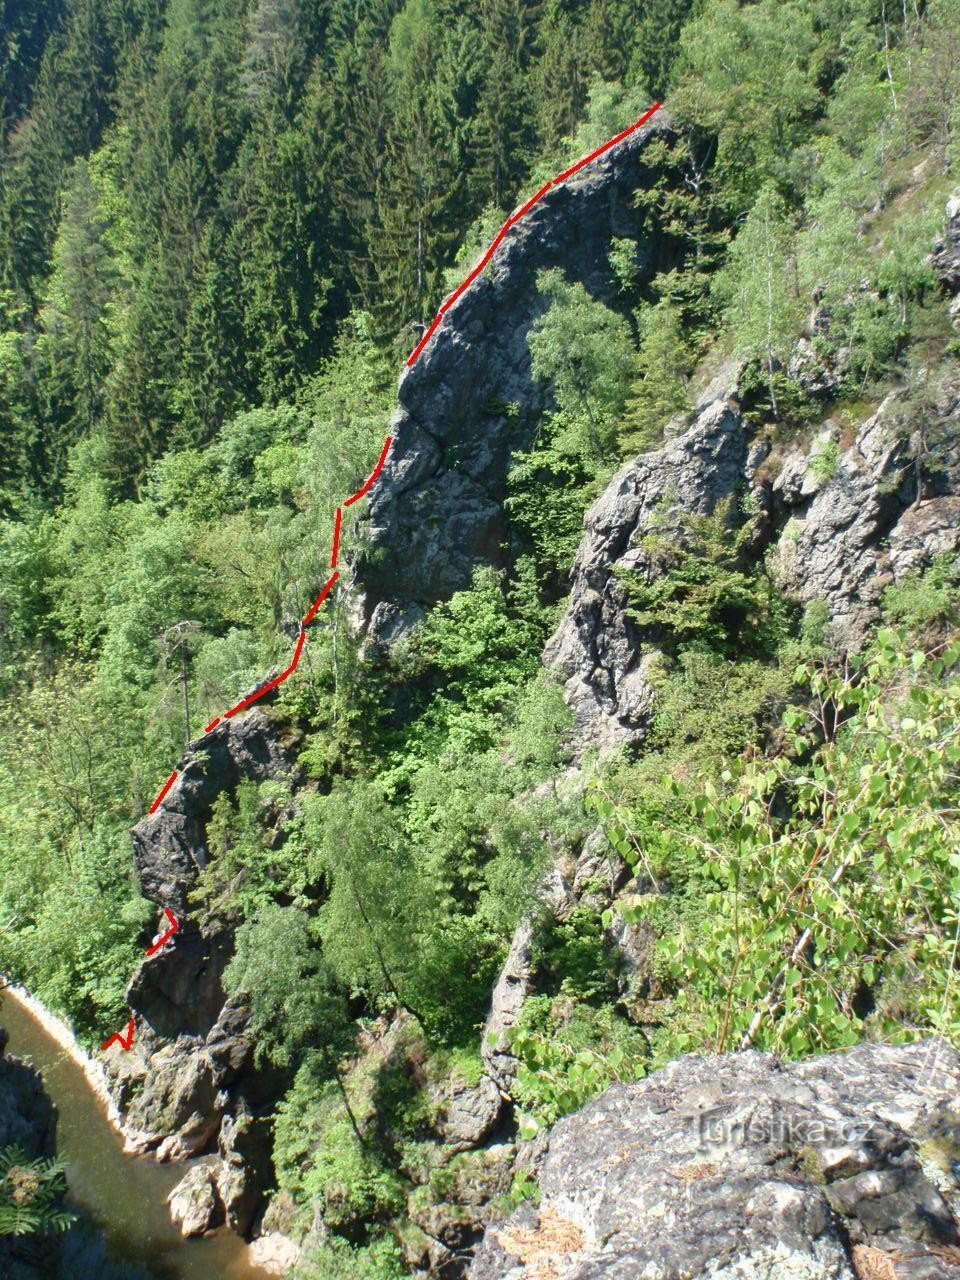 vista da rocha; fonte: www.lesycr.cz